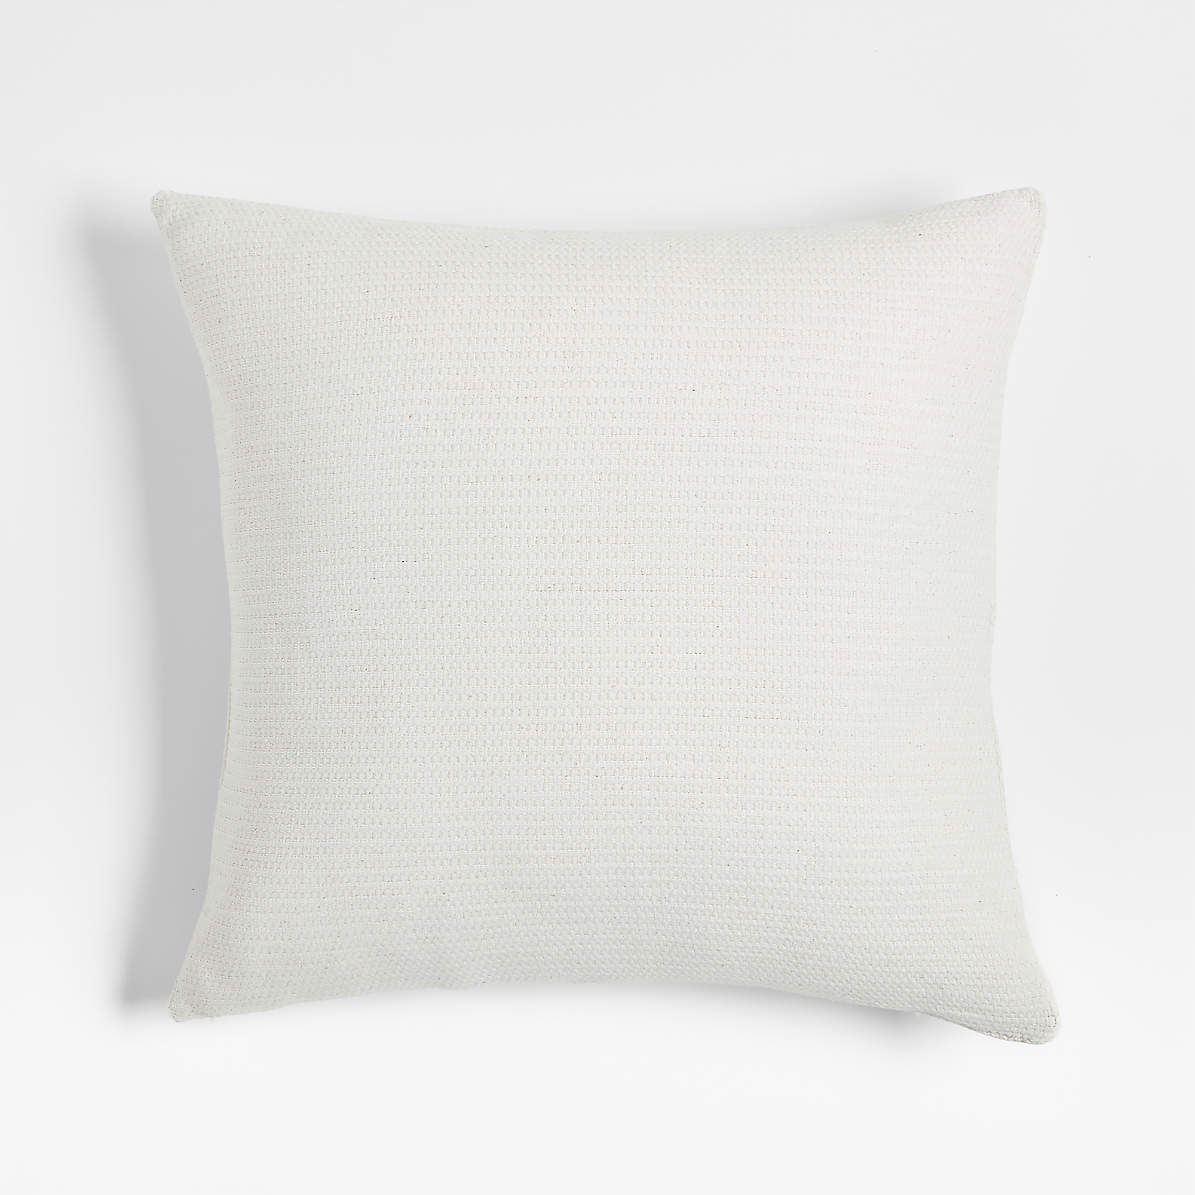 Feather Filled Square Throw Pillow White - Threshold™